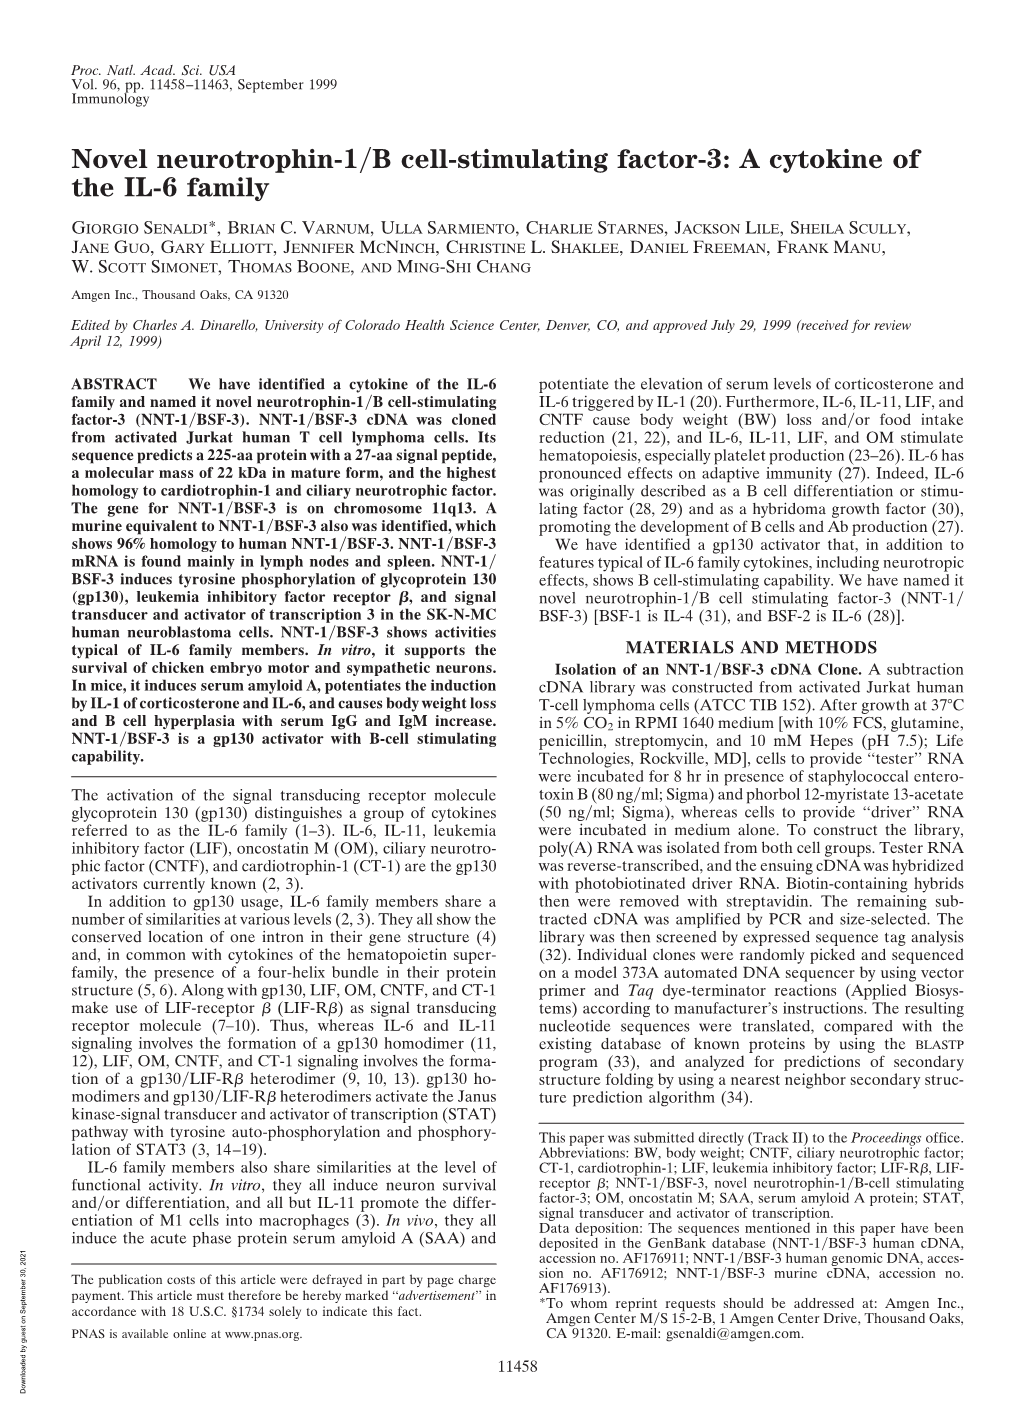 Novel Neurotrophin-1/B Cell-Stimulating Factor-3